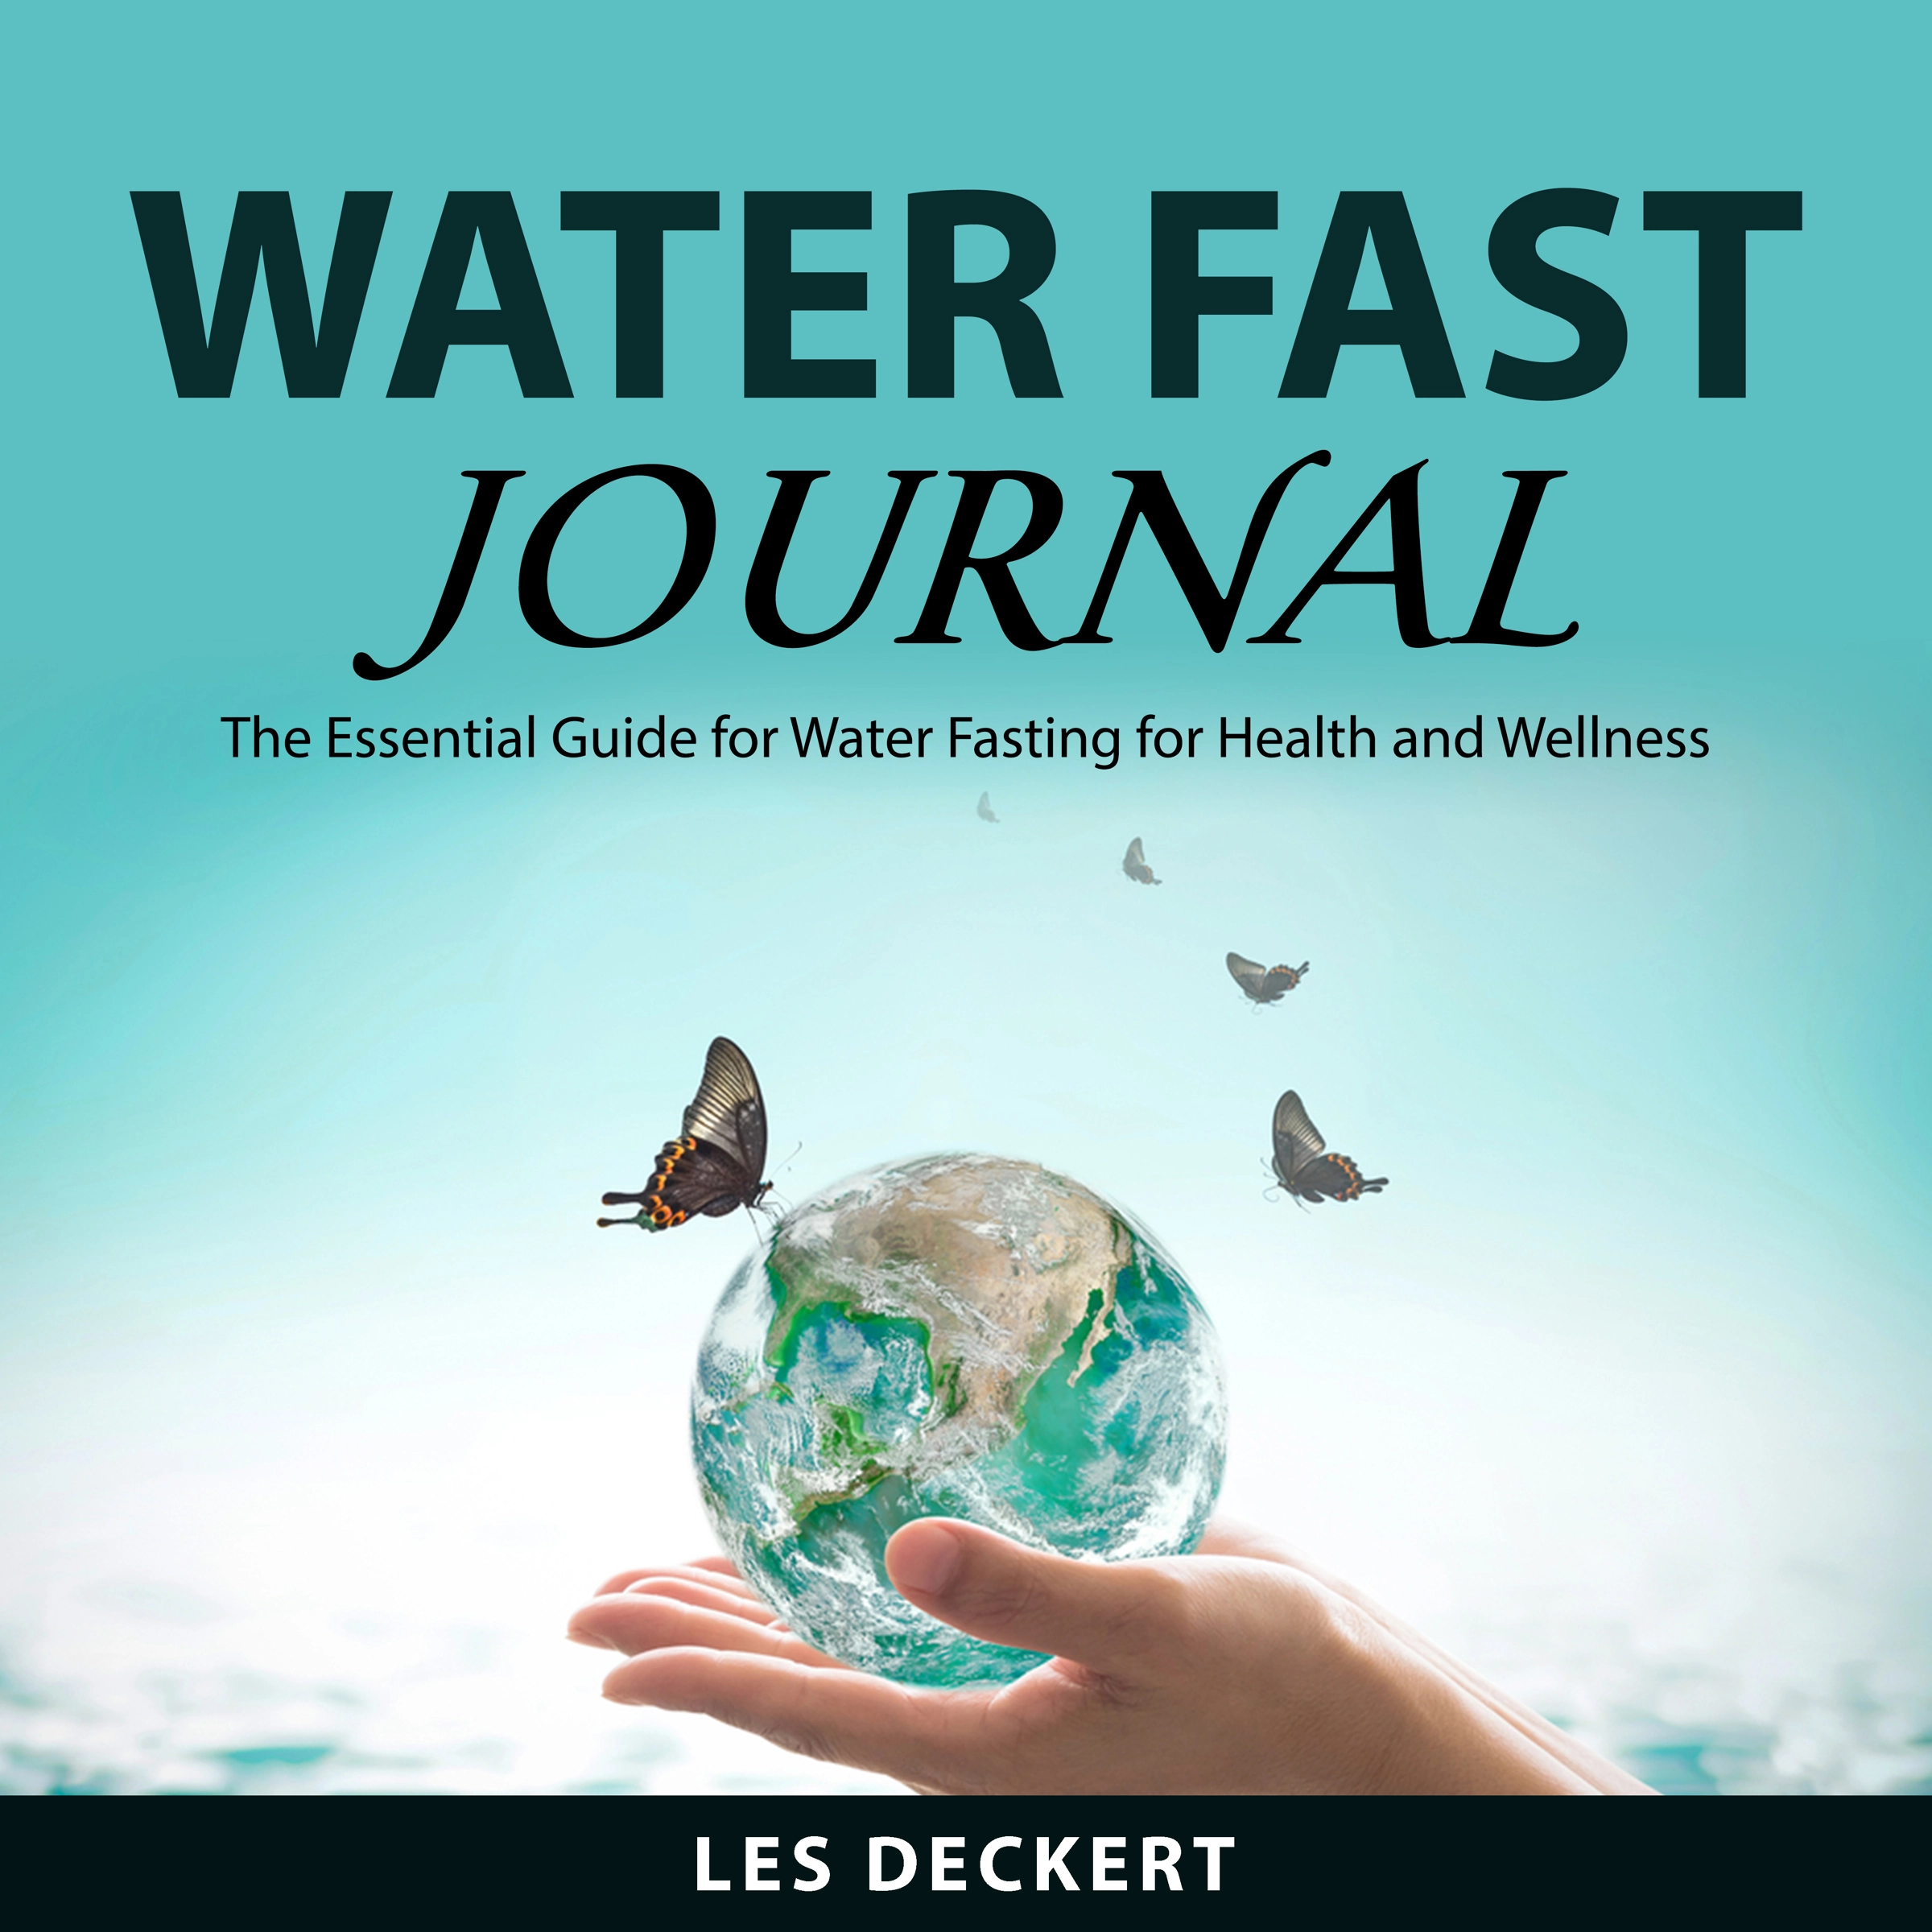 Water Fast Journal Audiobook by Les Deckert